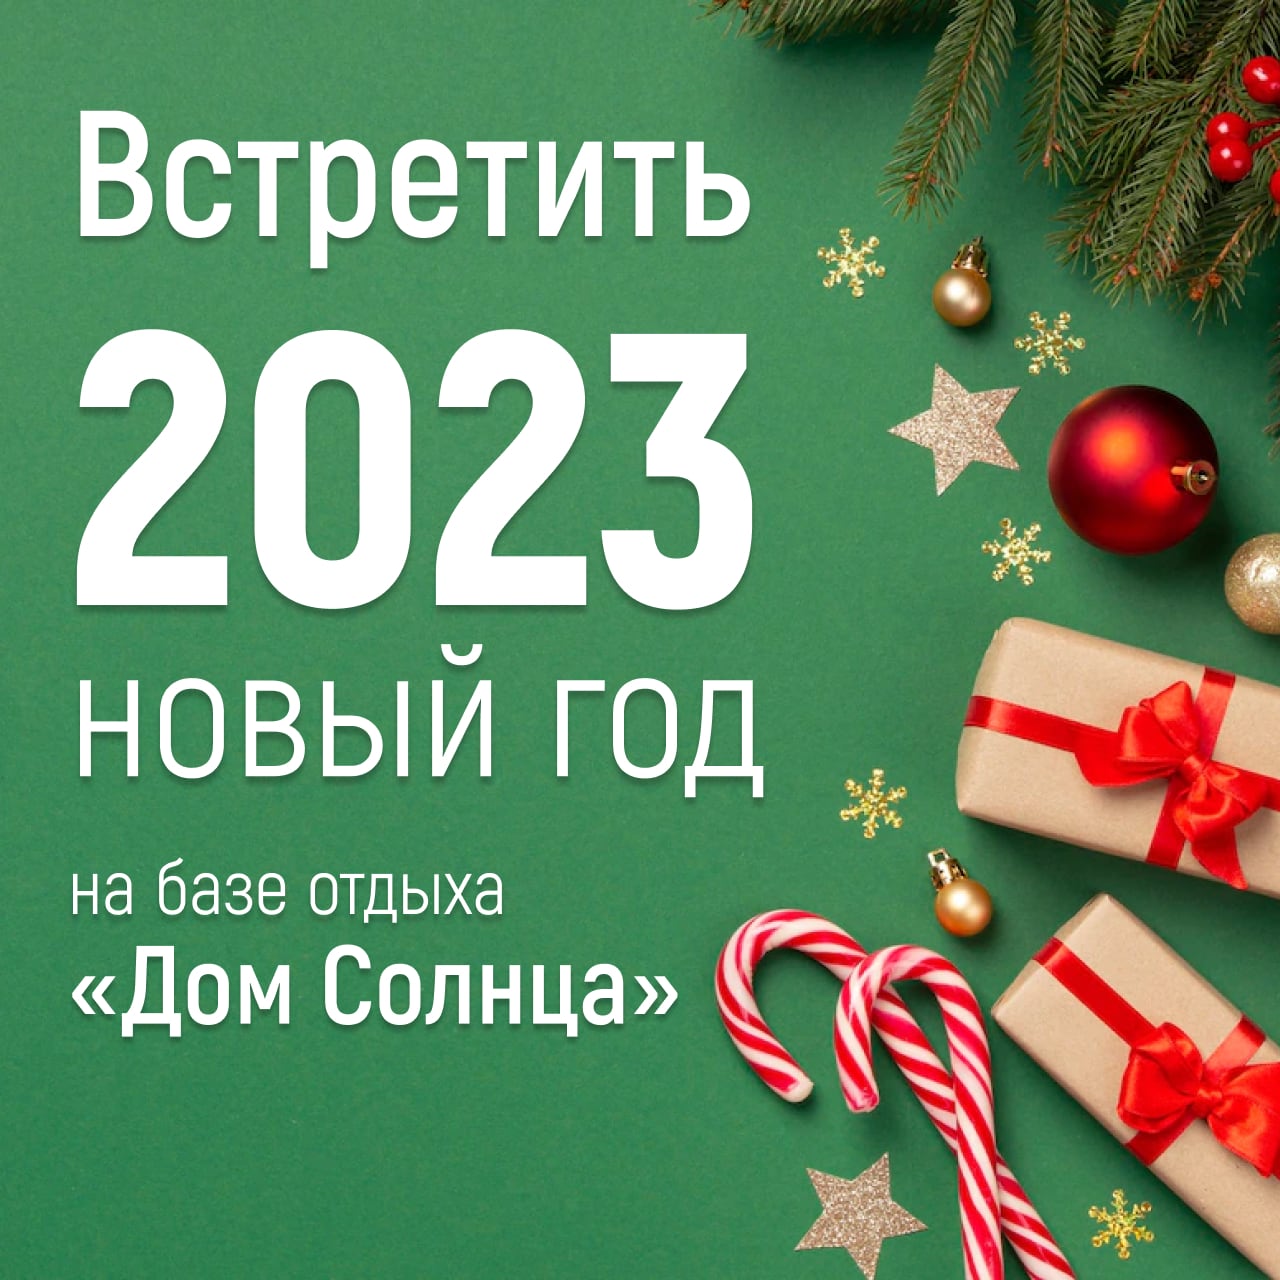 Новый год 2022 на базе «Дом солнца» в Астрахани